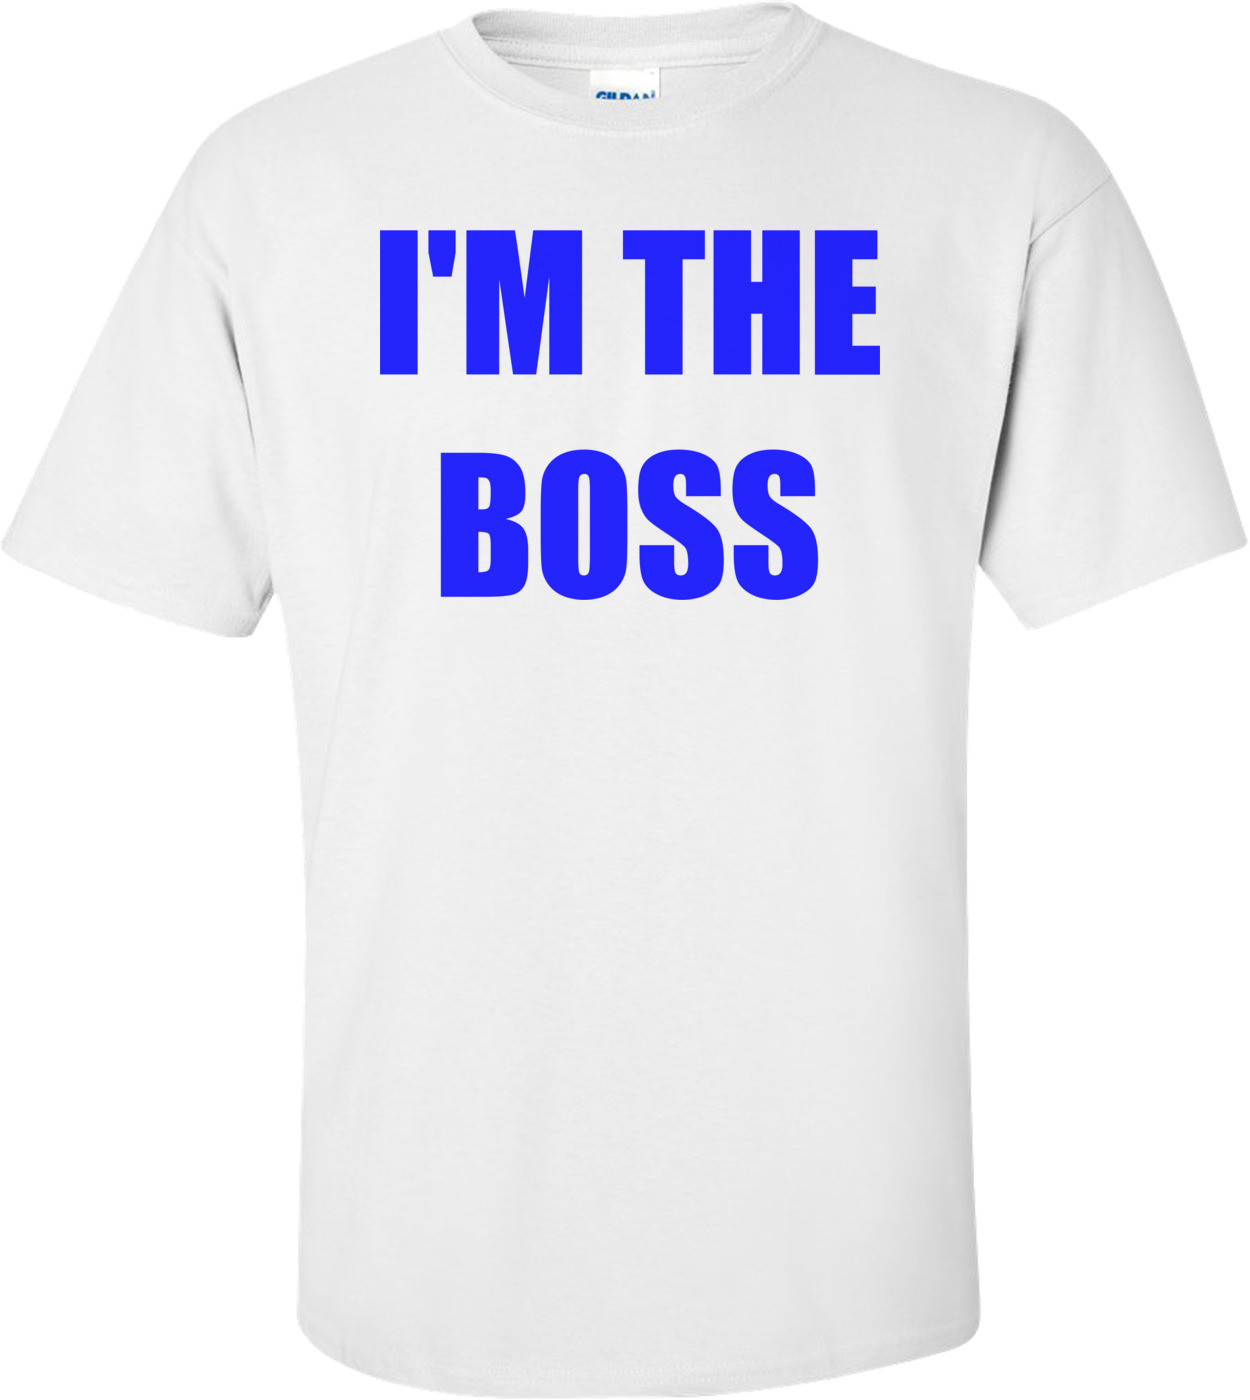 I'M THE BOSS Shirt